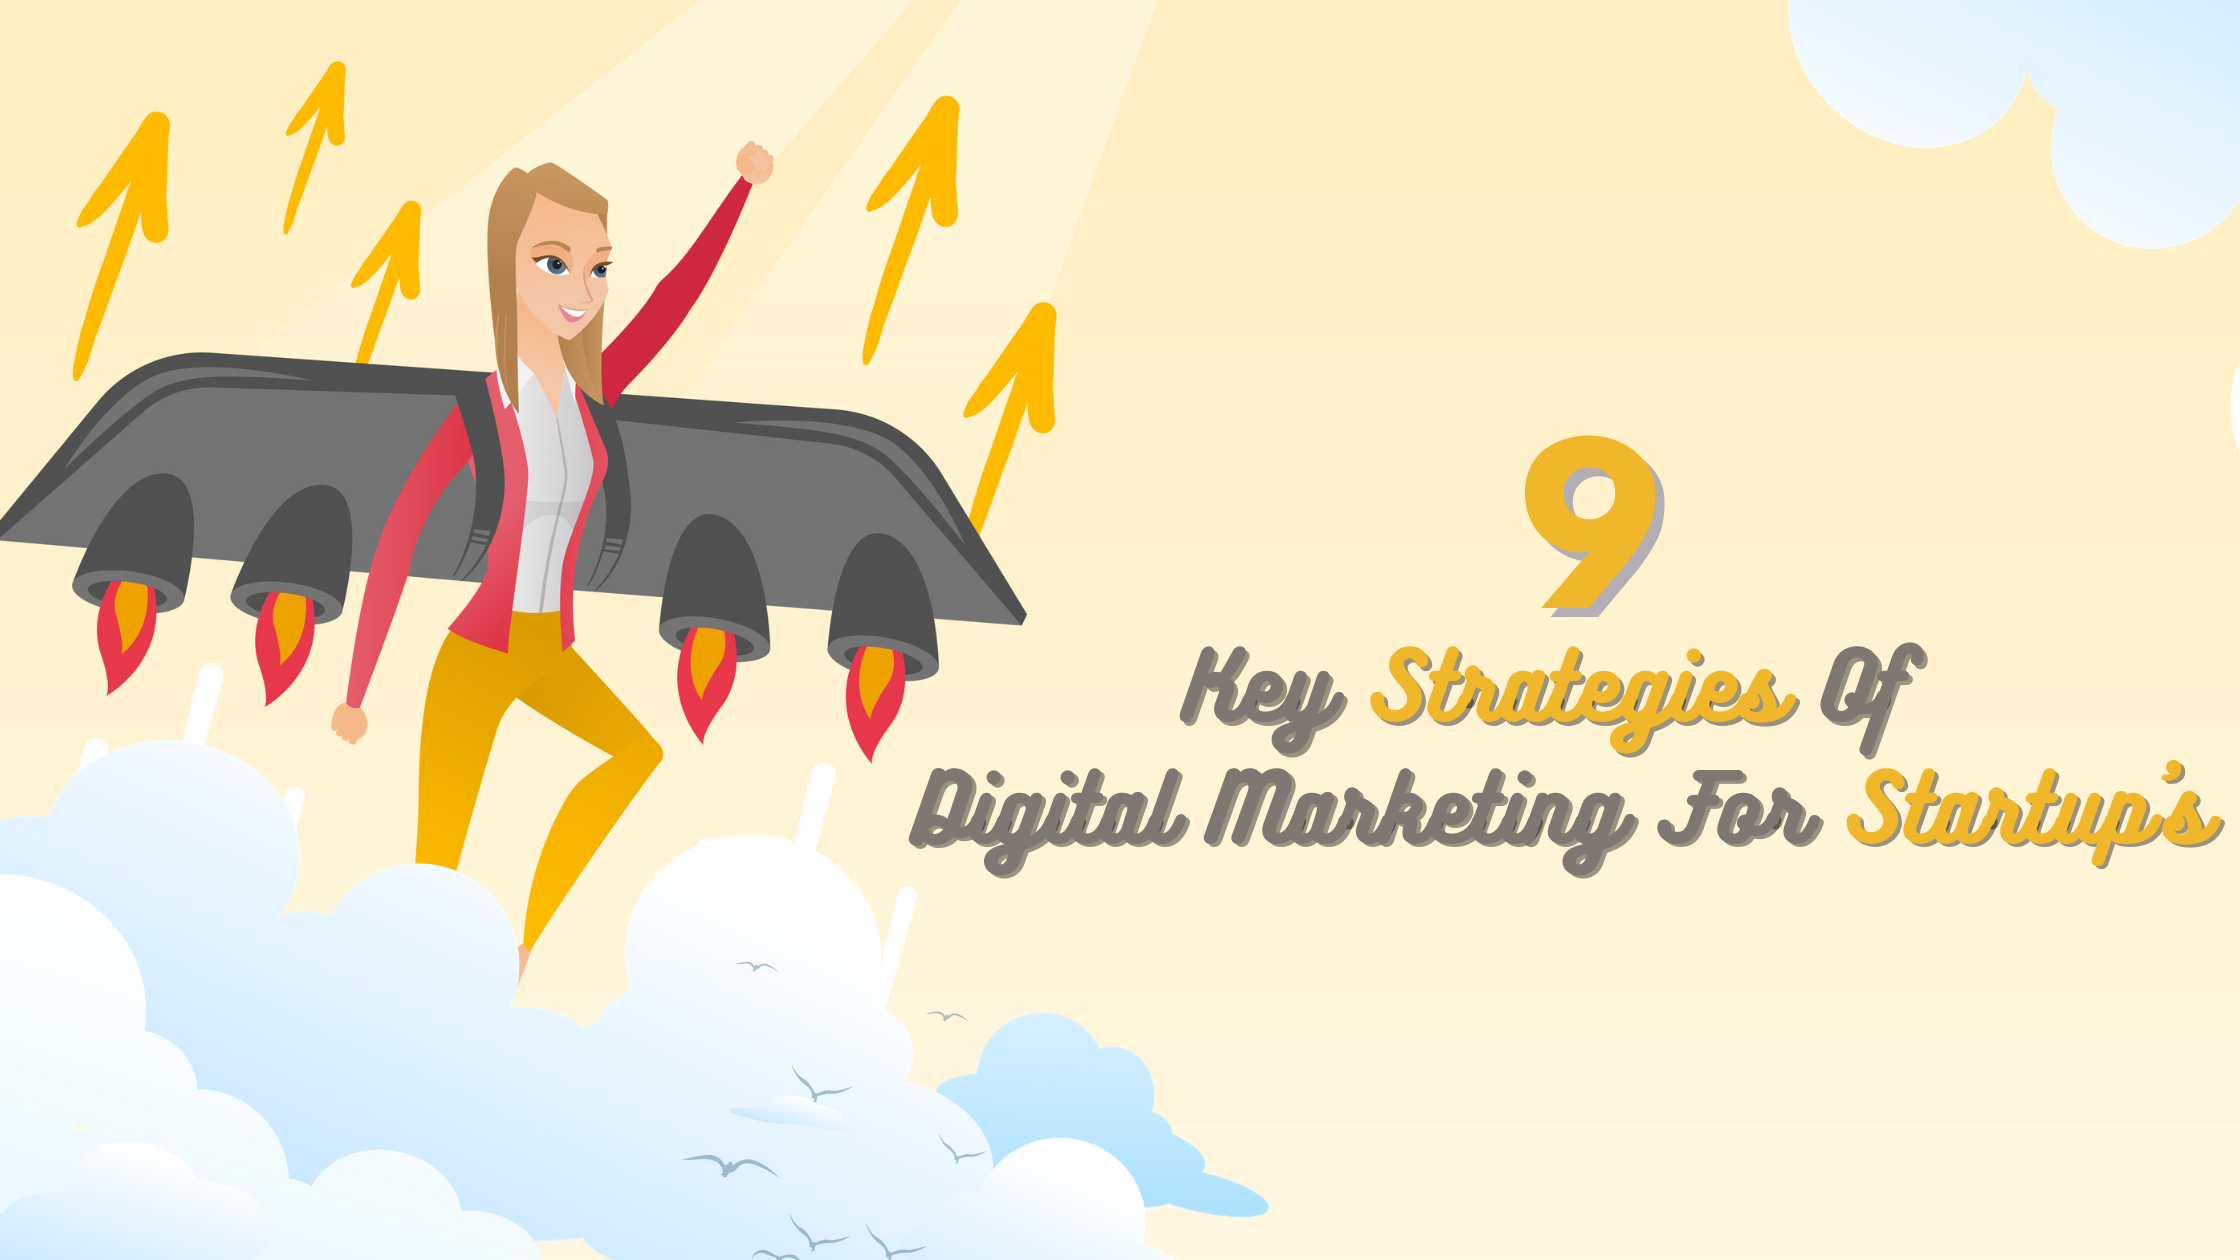 9 key strategies of Digital Marketing for startups